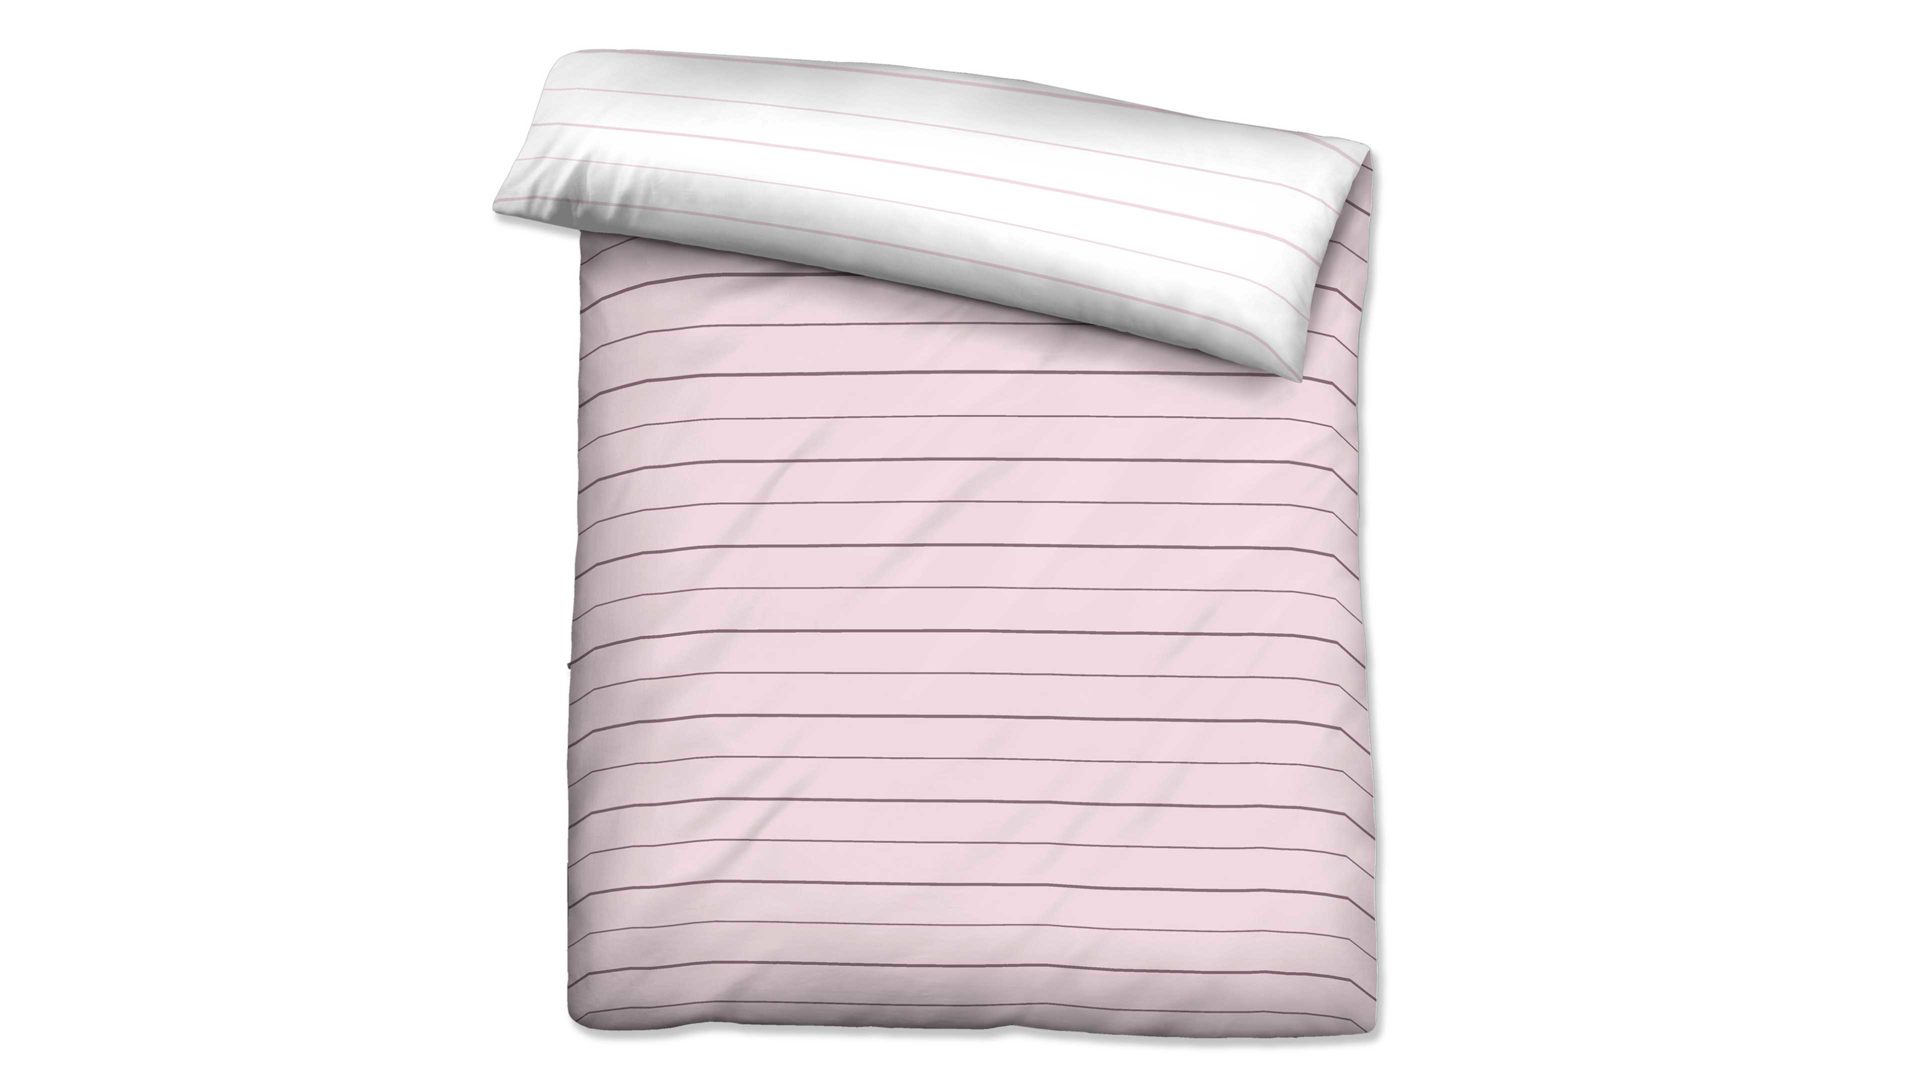 Bettbezug Biberna aus Stoff in Pastell biberna Mako-Satin Bettdeckenbezug Streifen Mix & Match rosefarbene & sturmgraue Streifen – ca. 155 x 220 cm